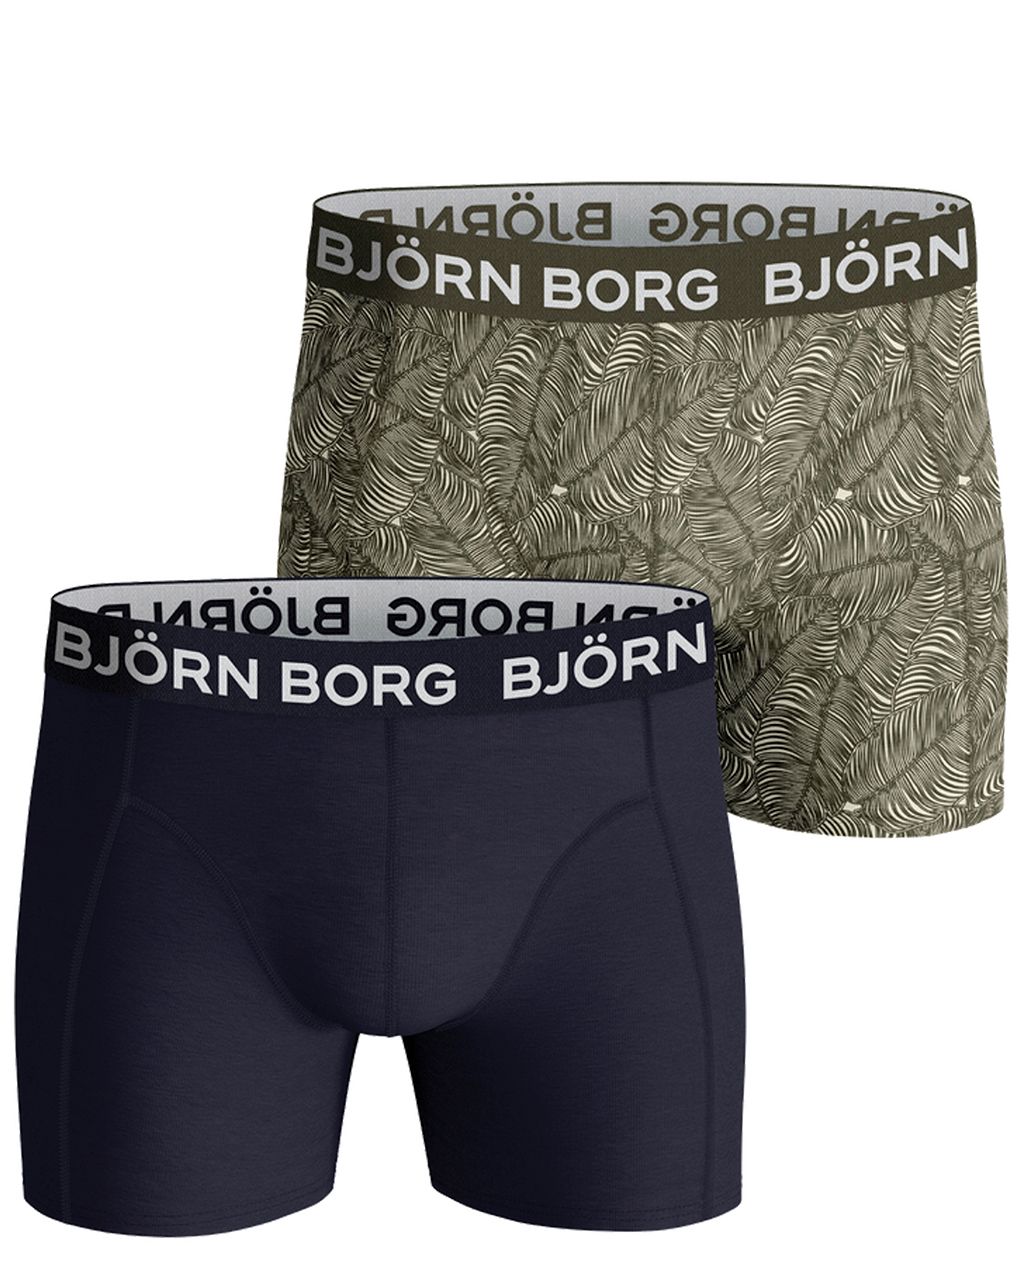 Björn Borg Boxershort Groen 078688-001-L